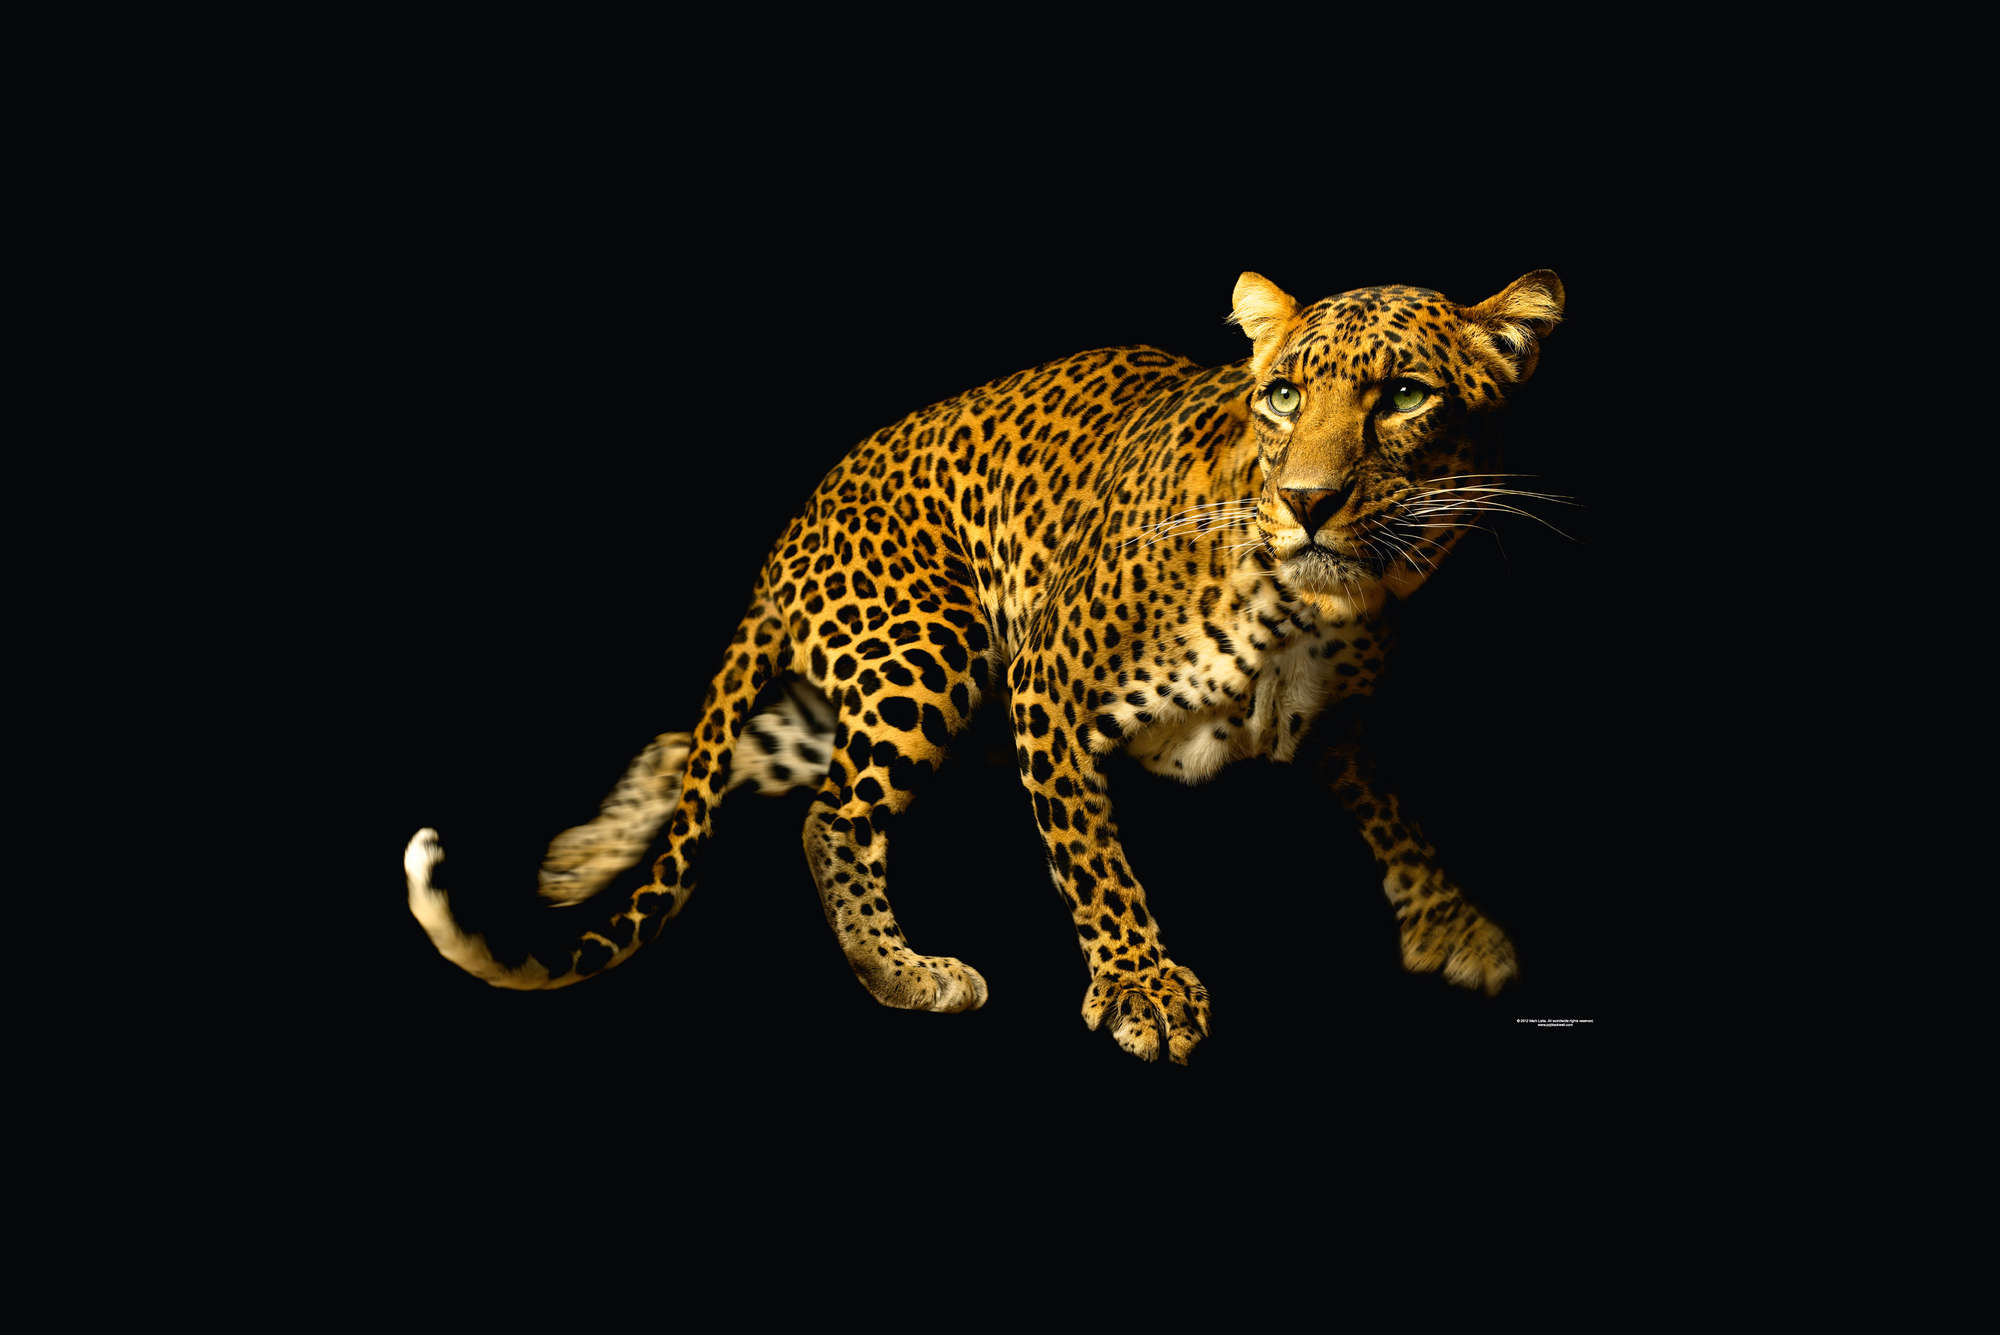             Leopard – Fototapete mit Tier-Portrait
        